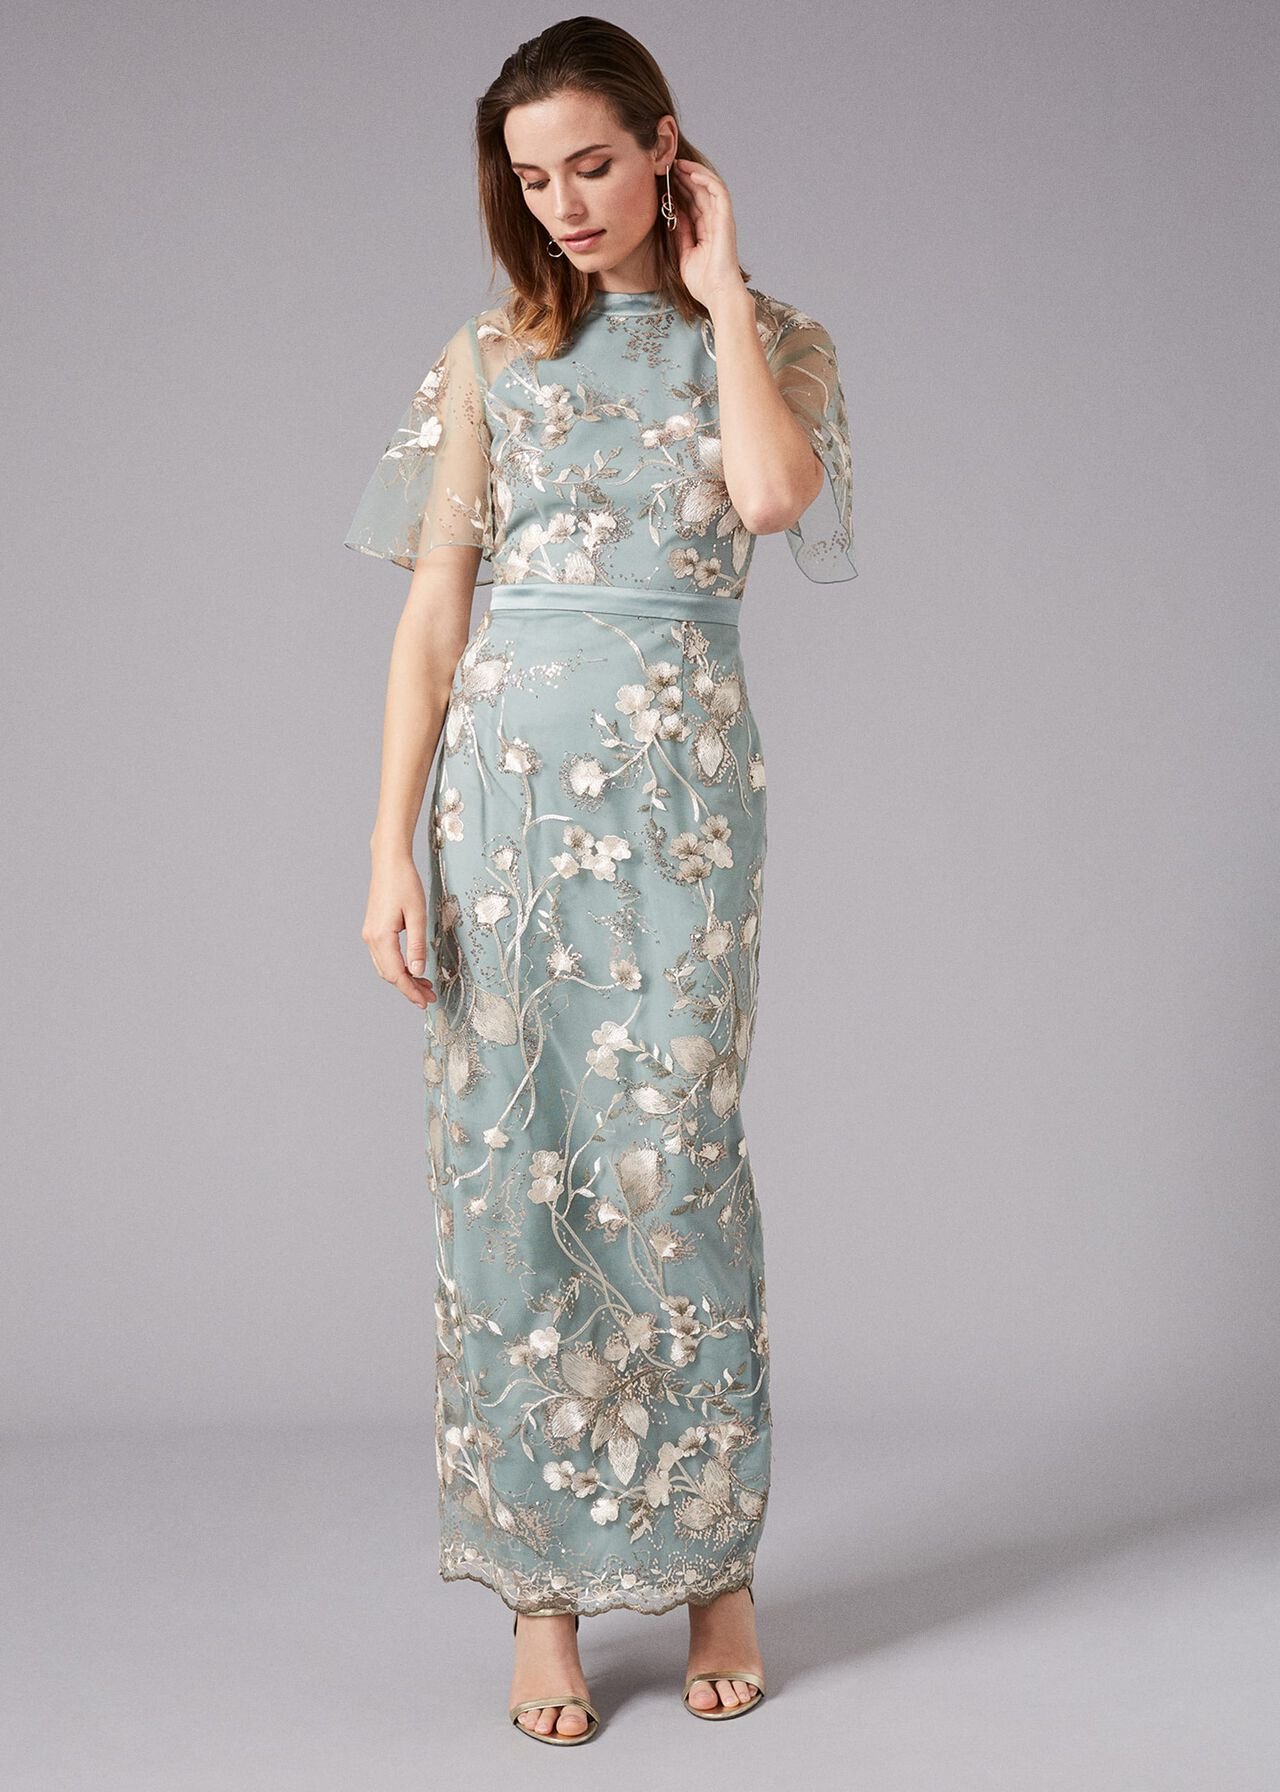 Glenda Floral Embroidered Maxi Dress